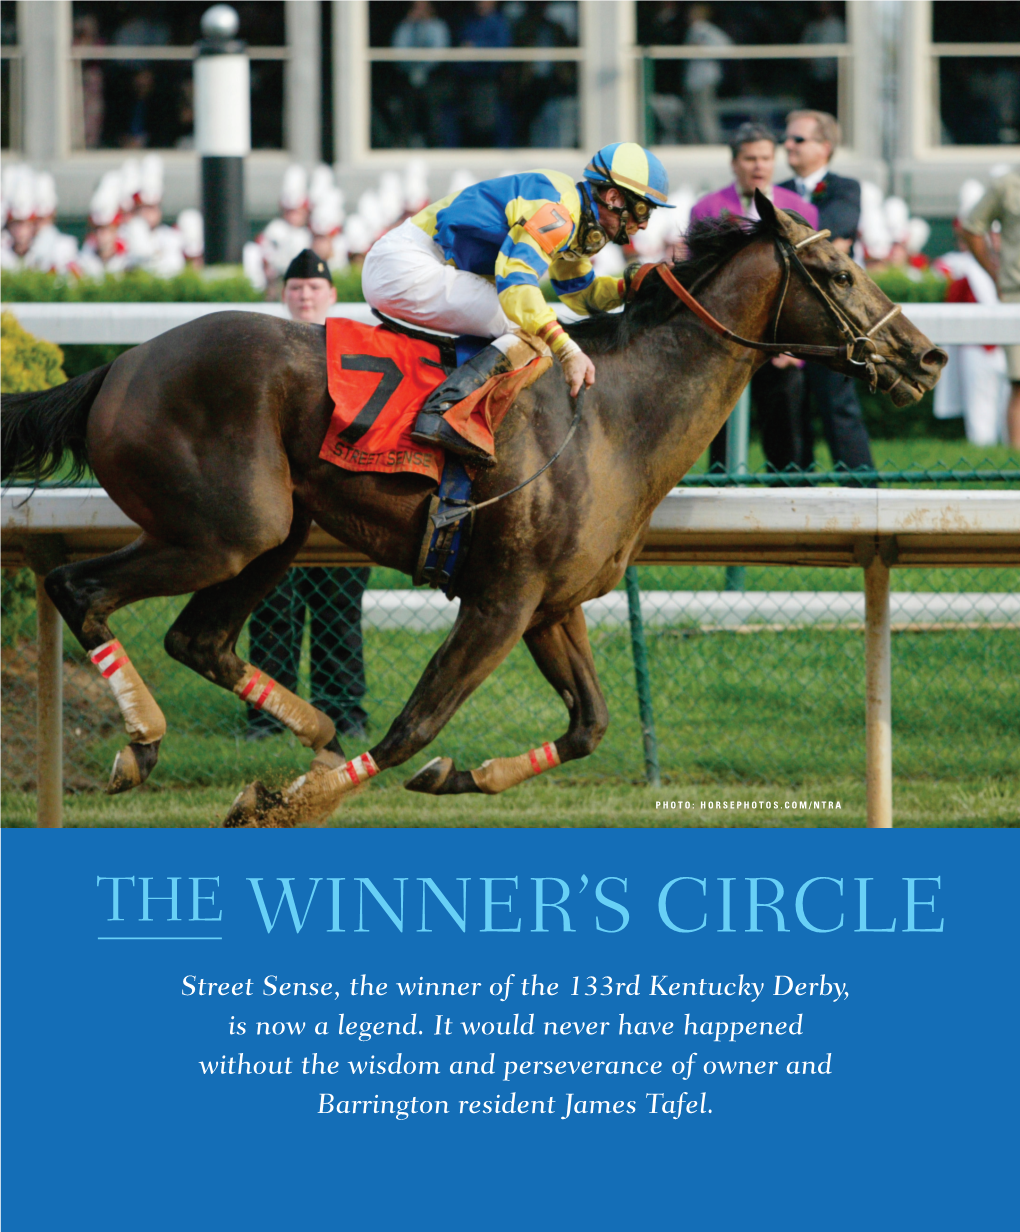 The Winner's Circle